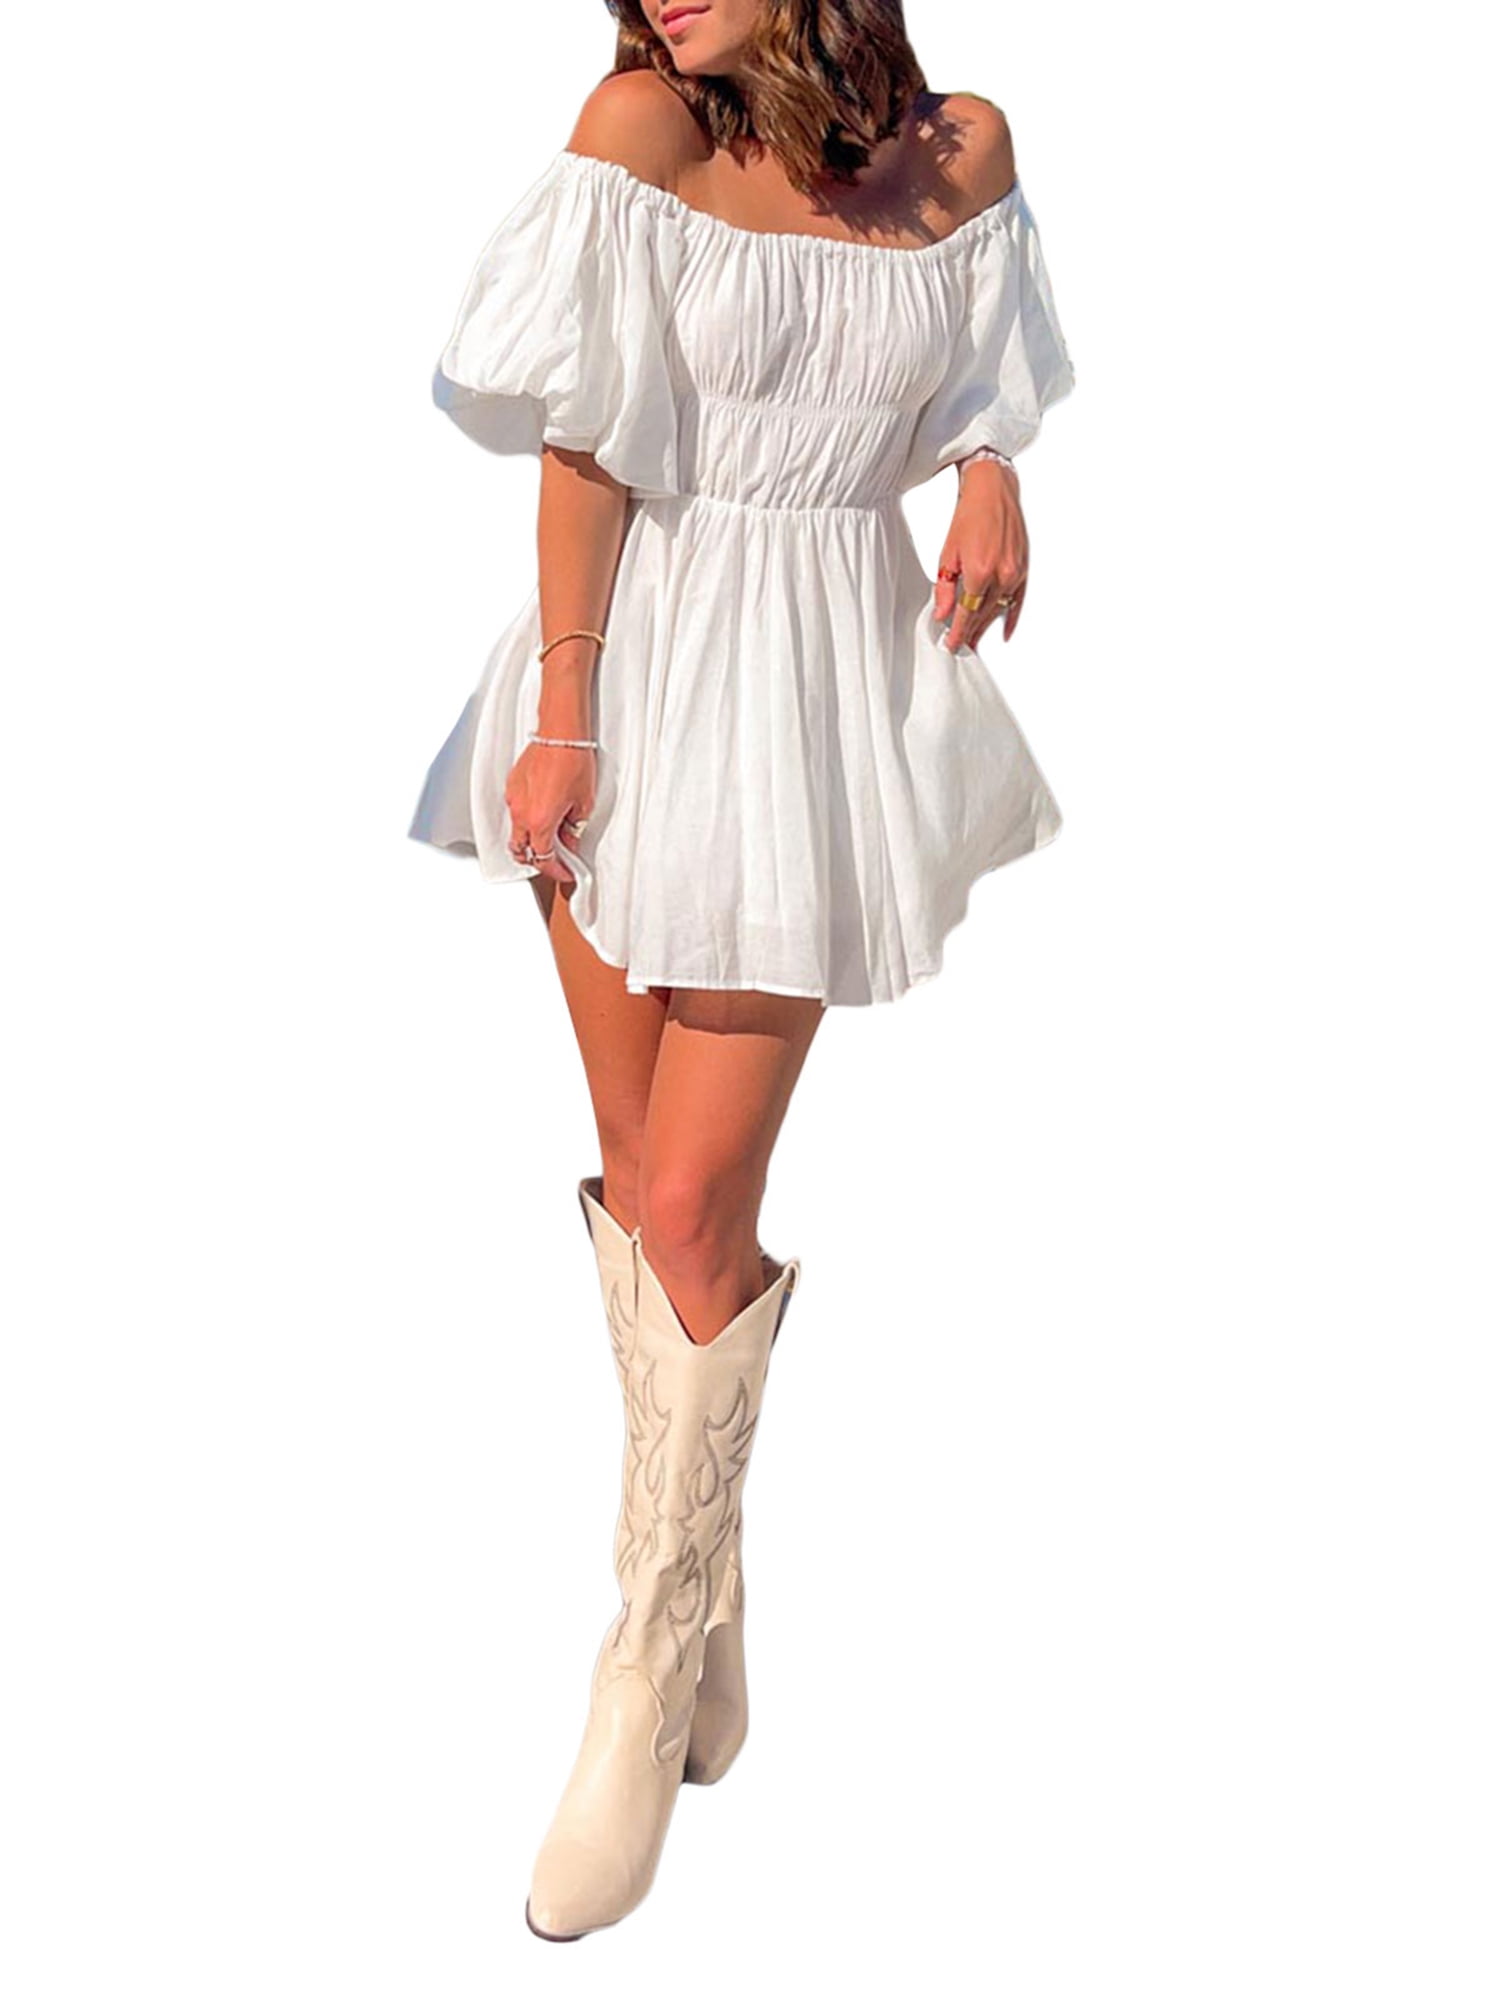 white pirate dress